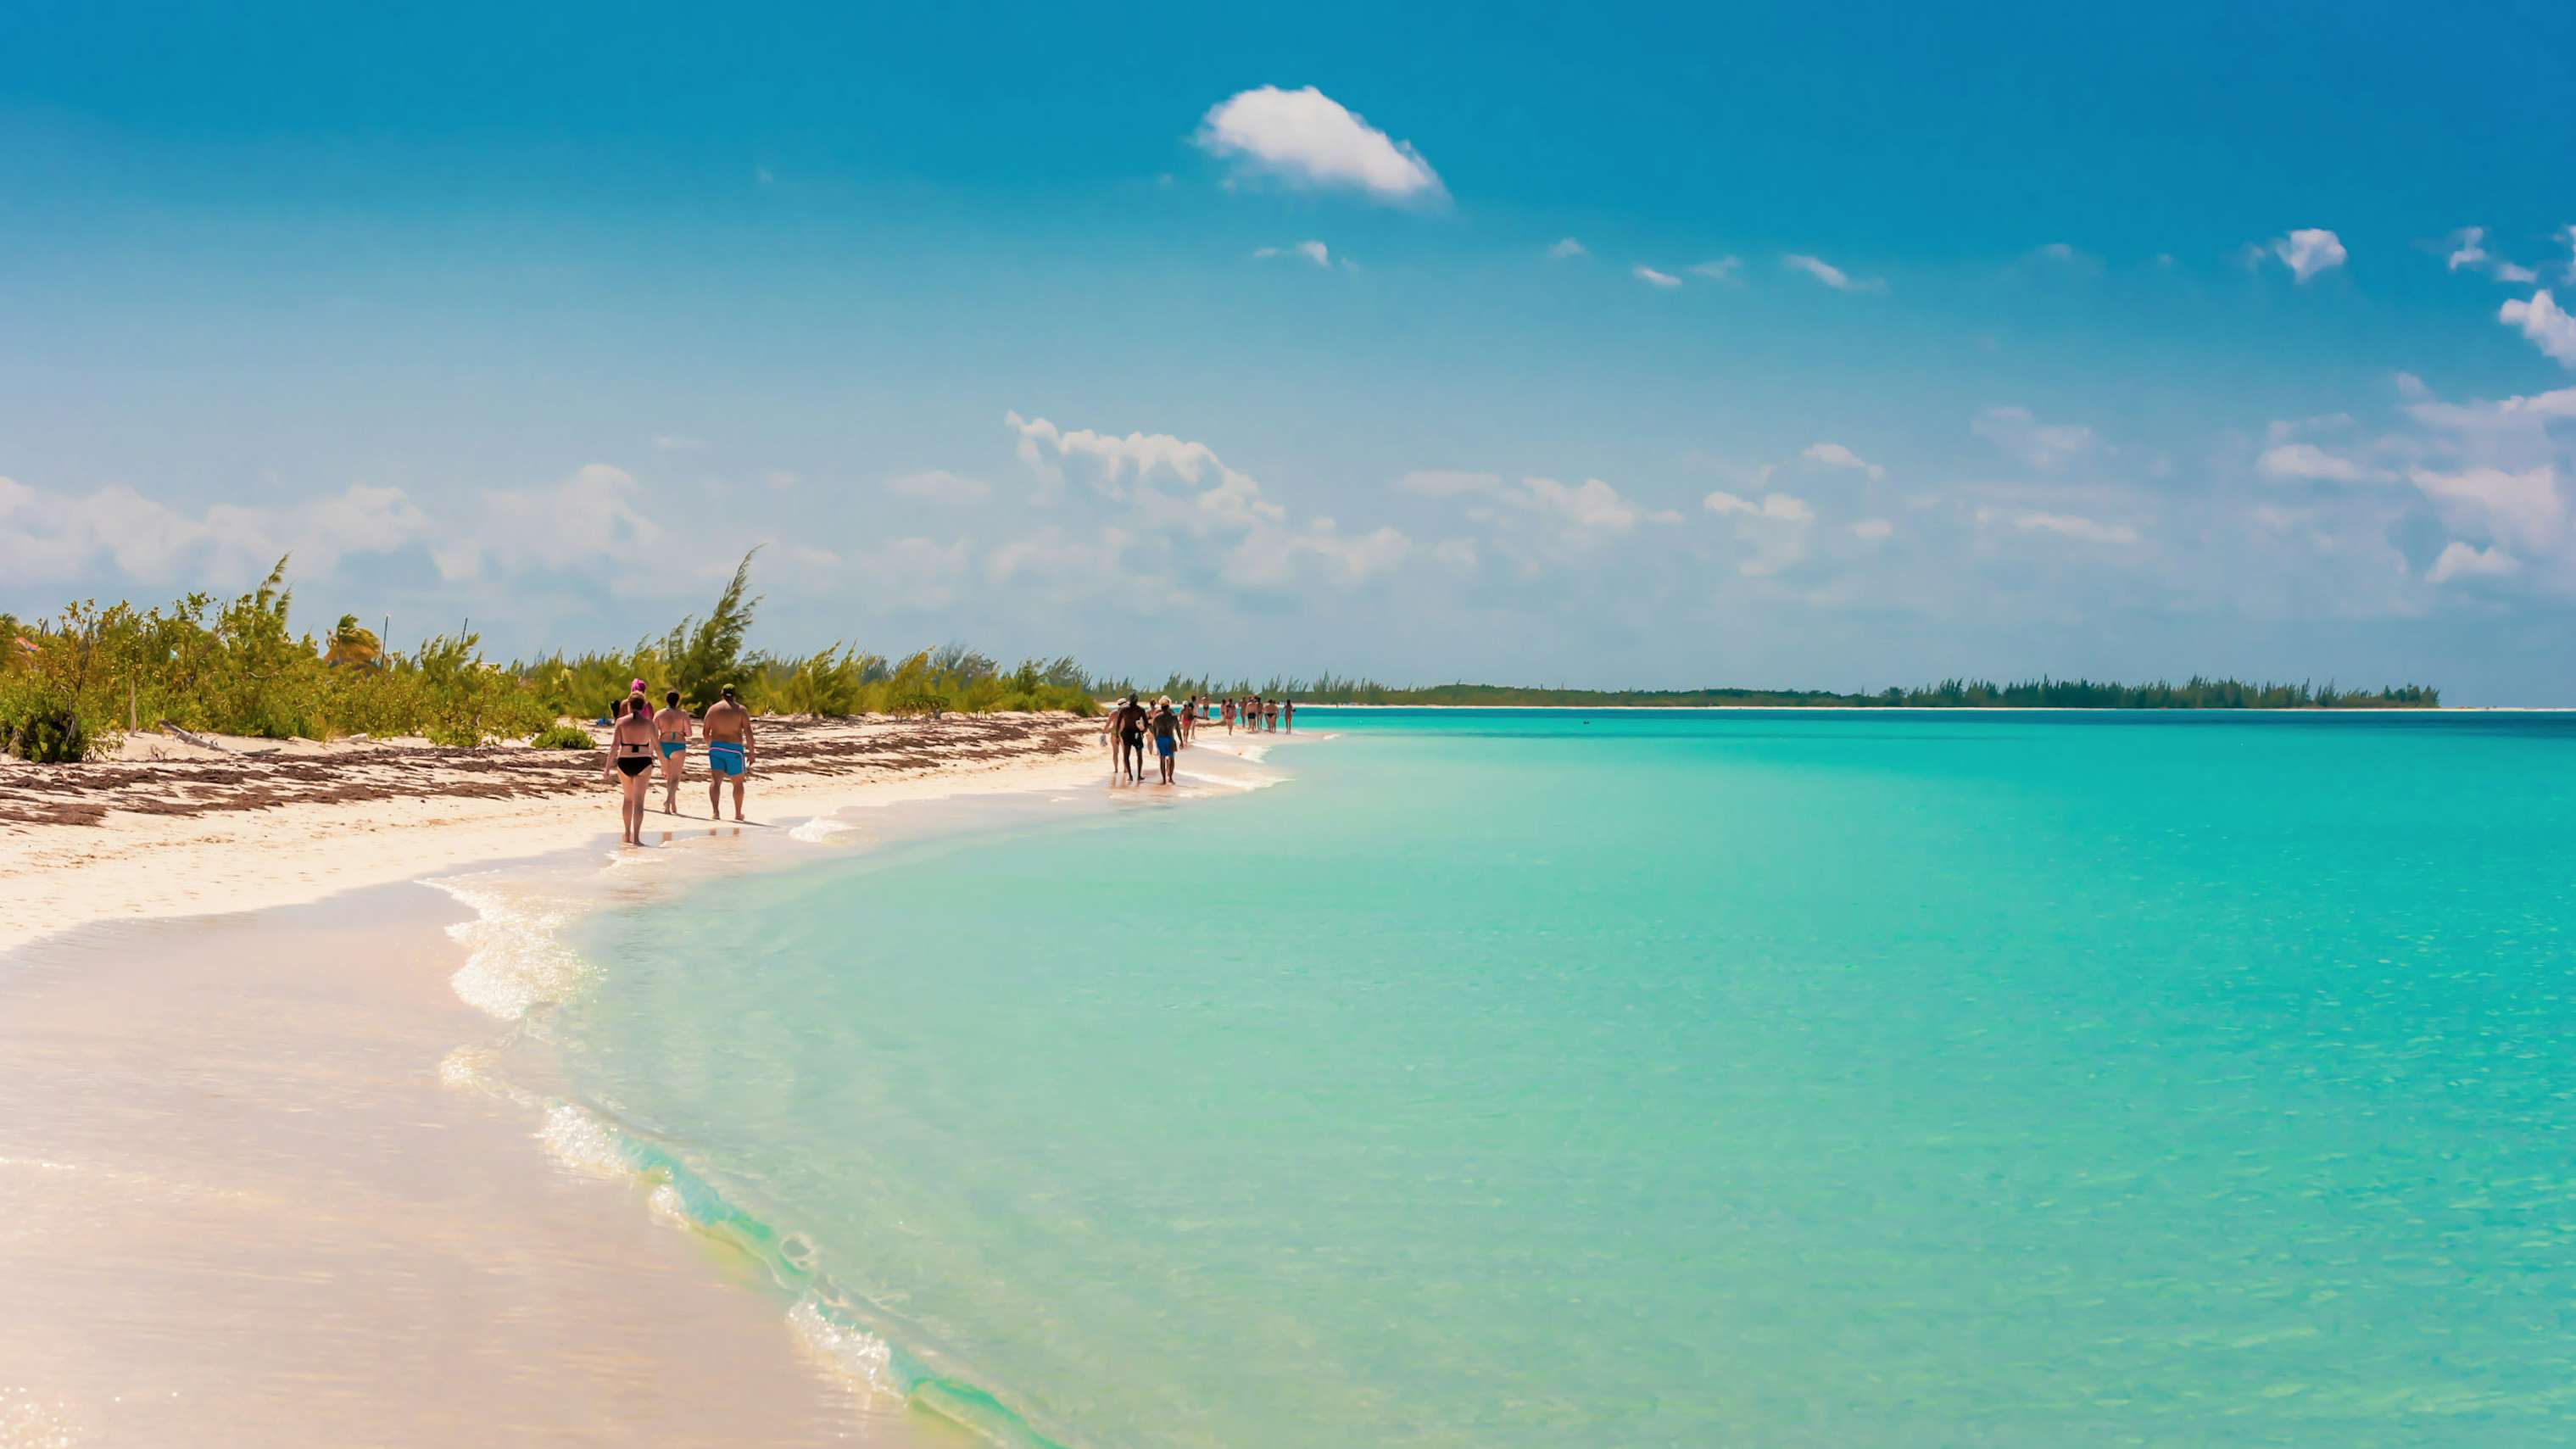 Cuba Yacht Charter - Sandy beach Playa Paradise of the island of Cayo Largo, Cuba with turquoise waters